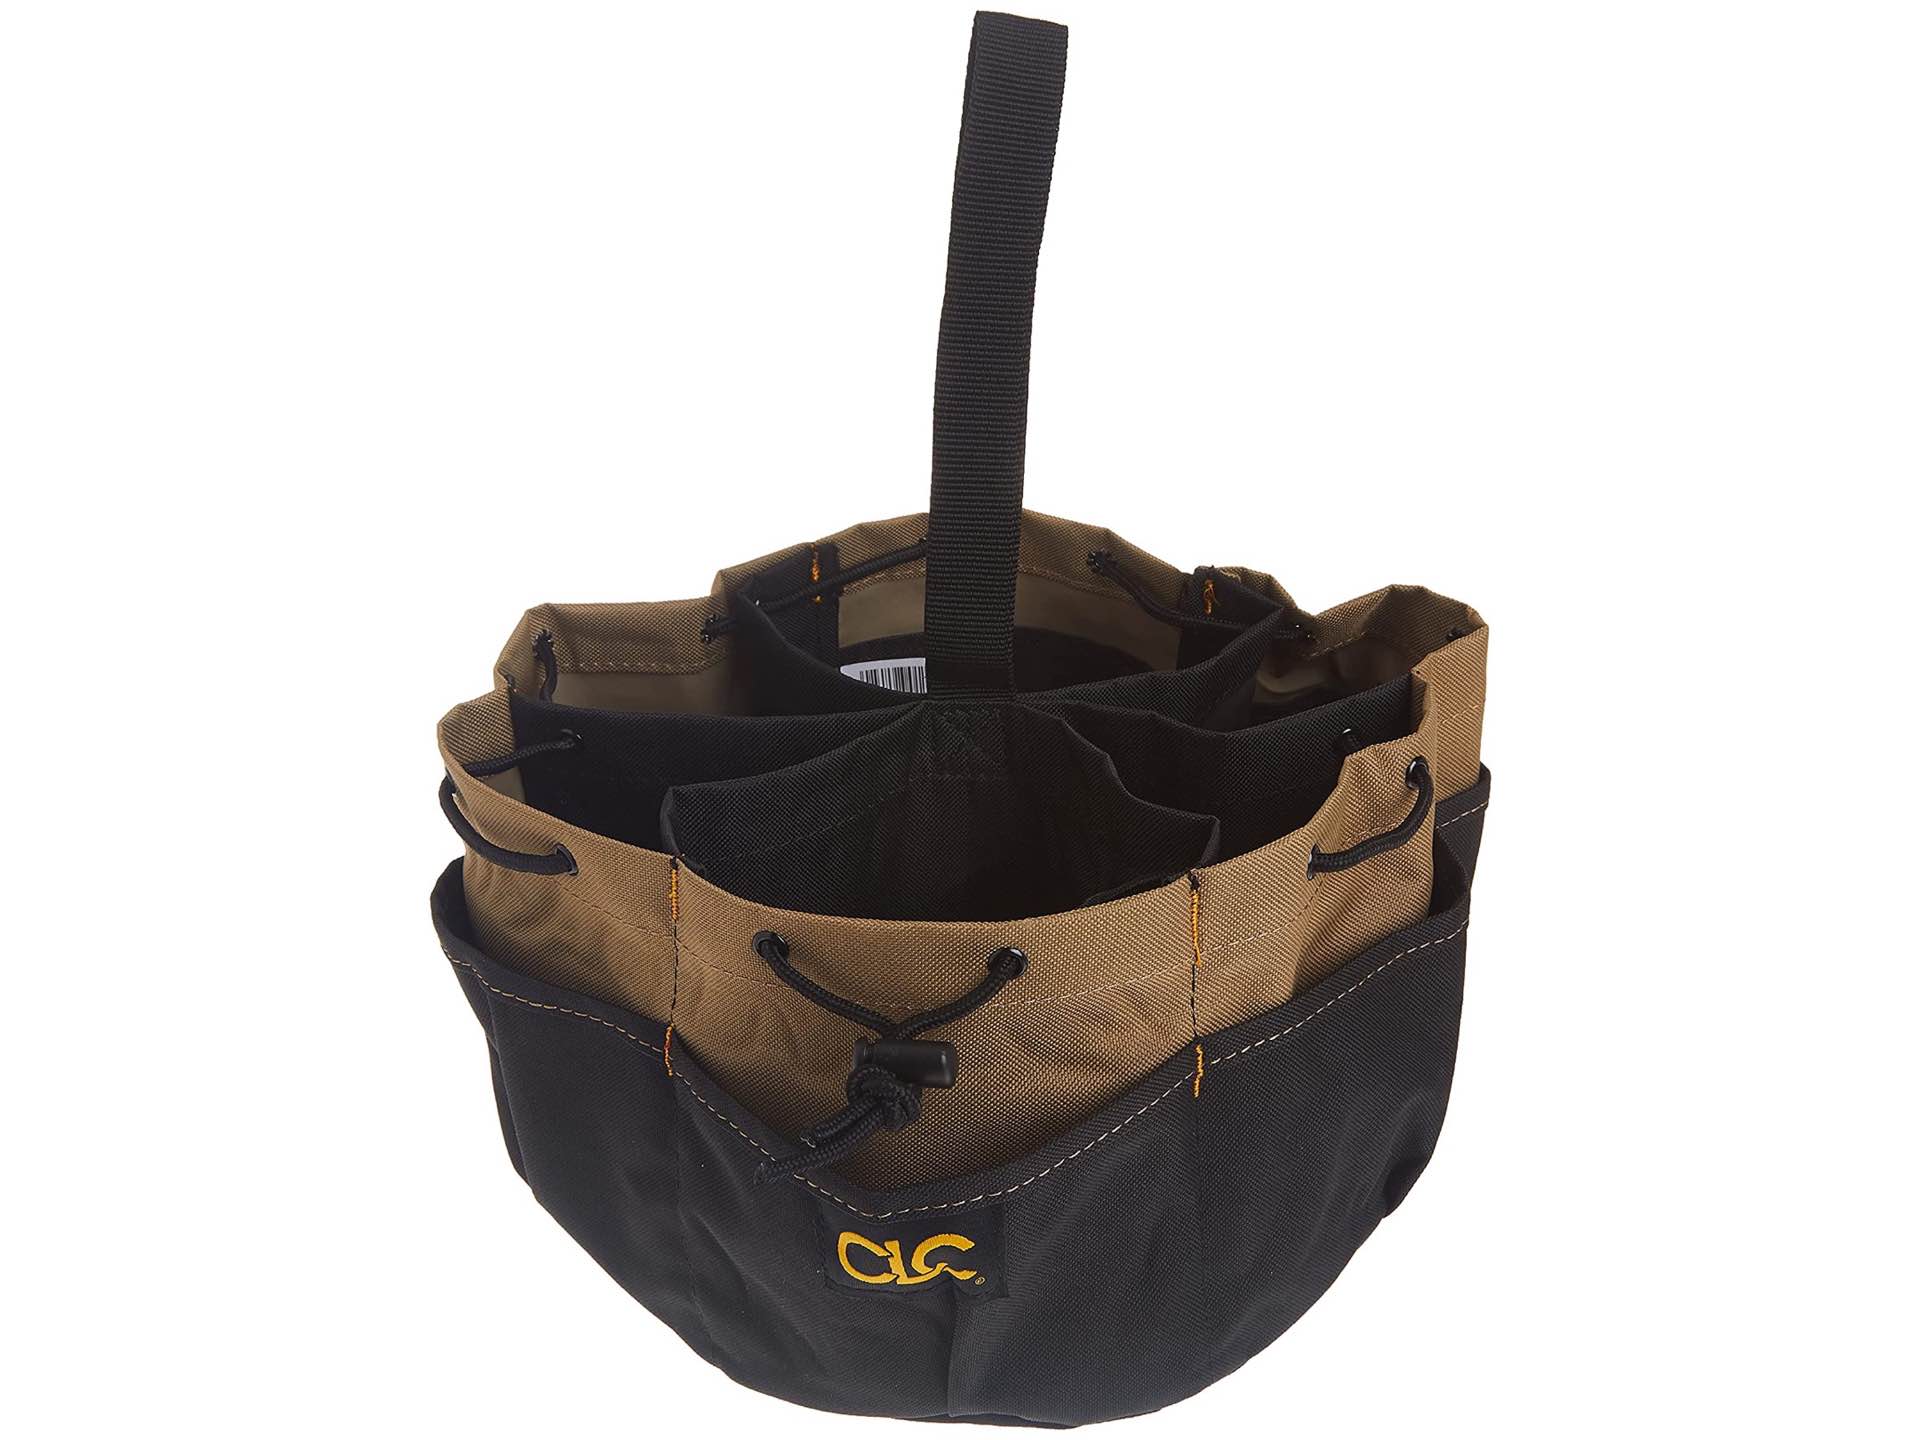 CLC “BucketBag” drawstring tool bag. ($21)